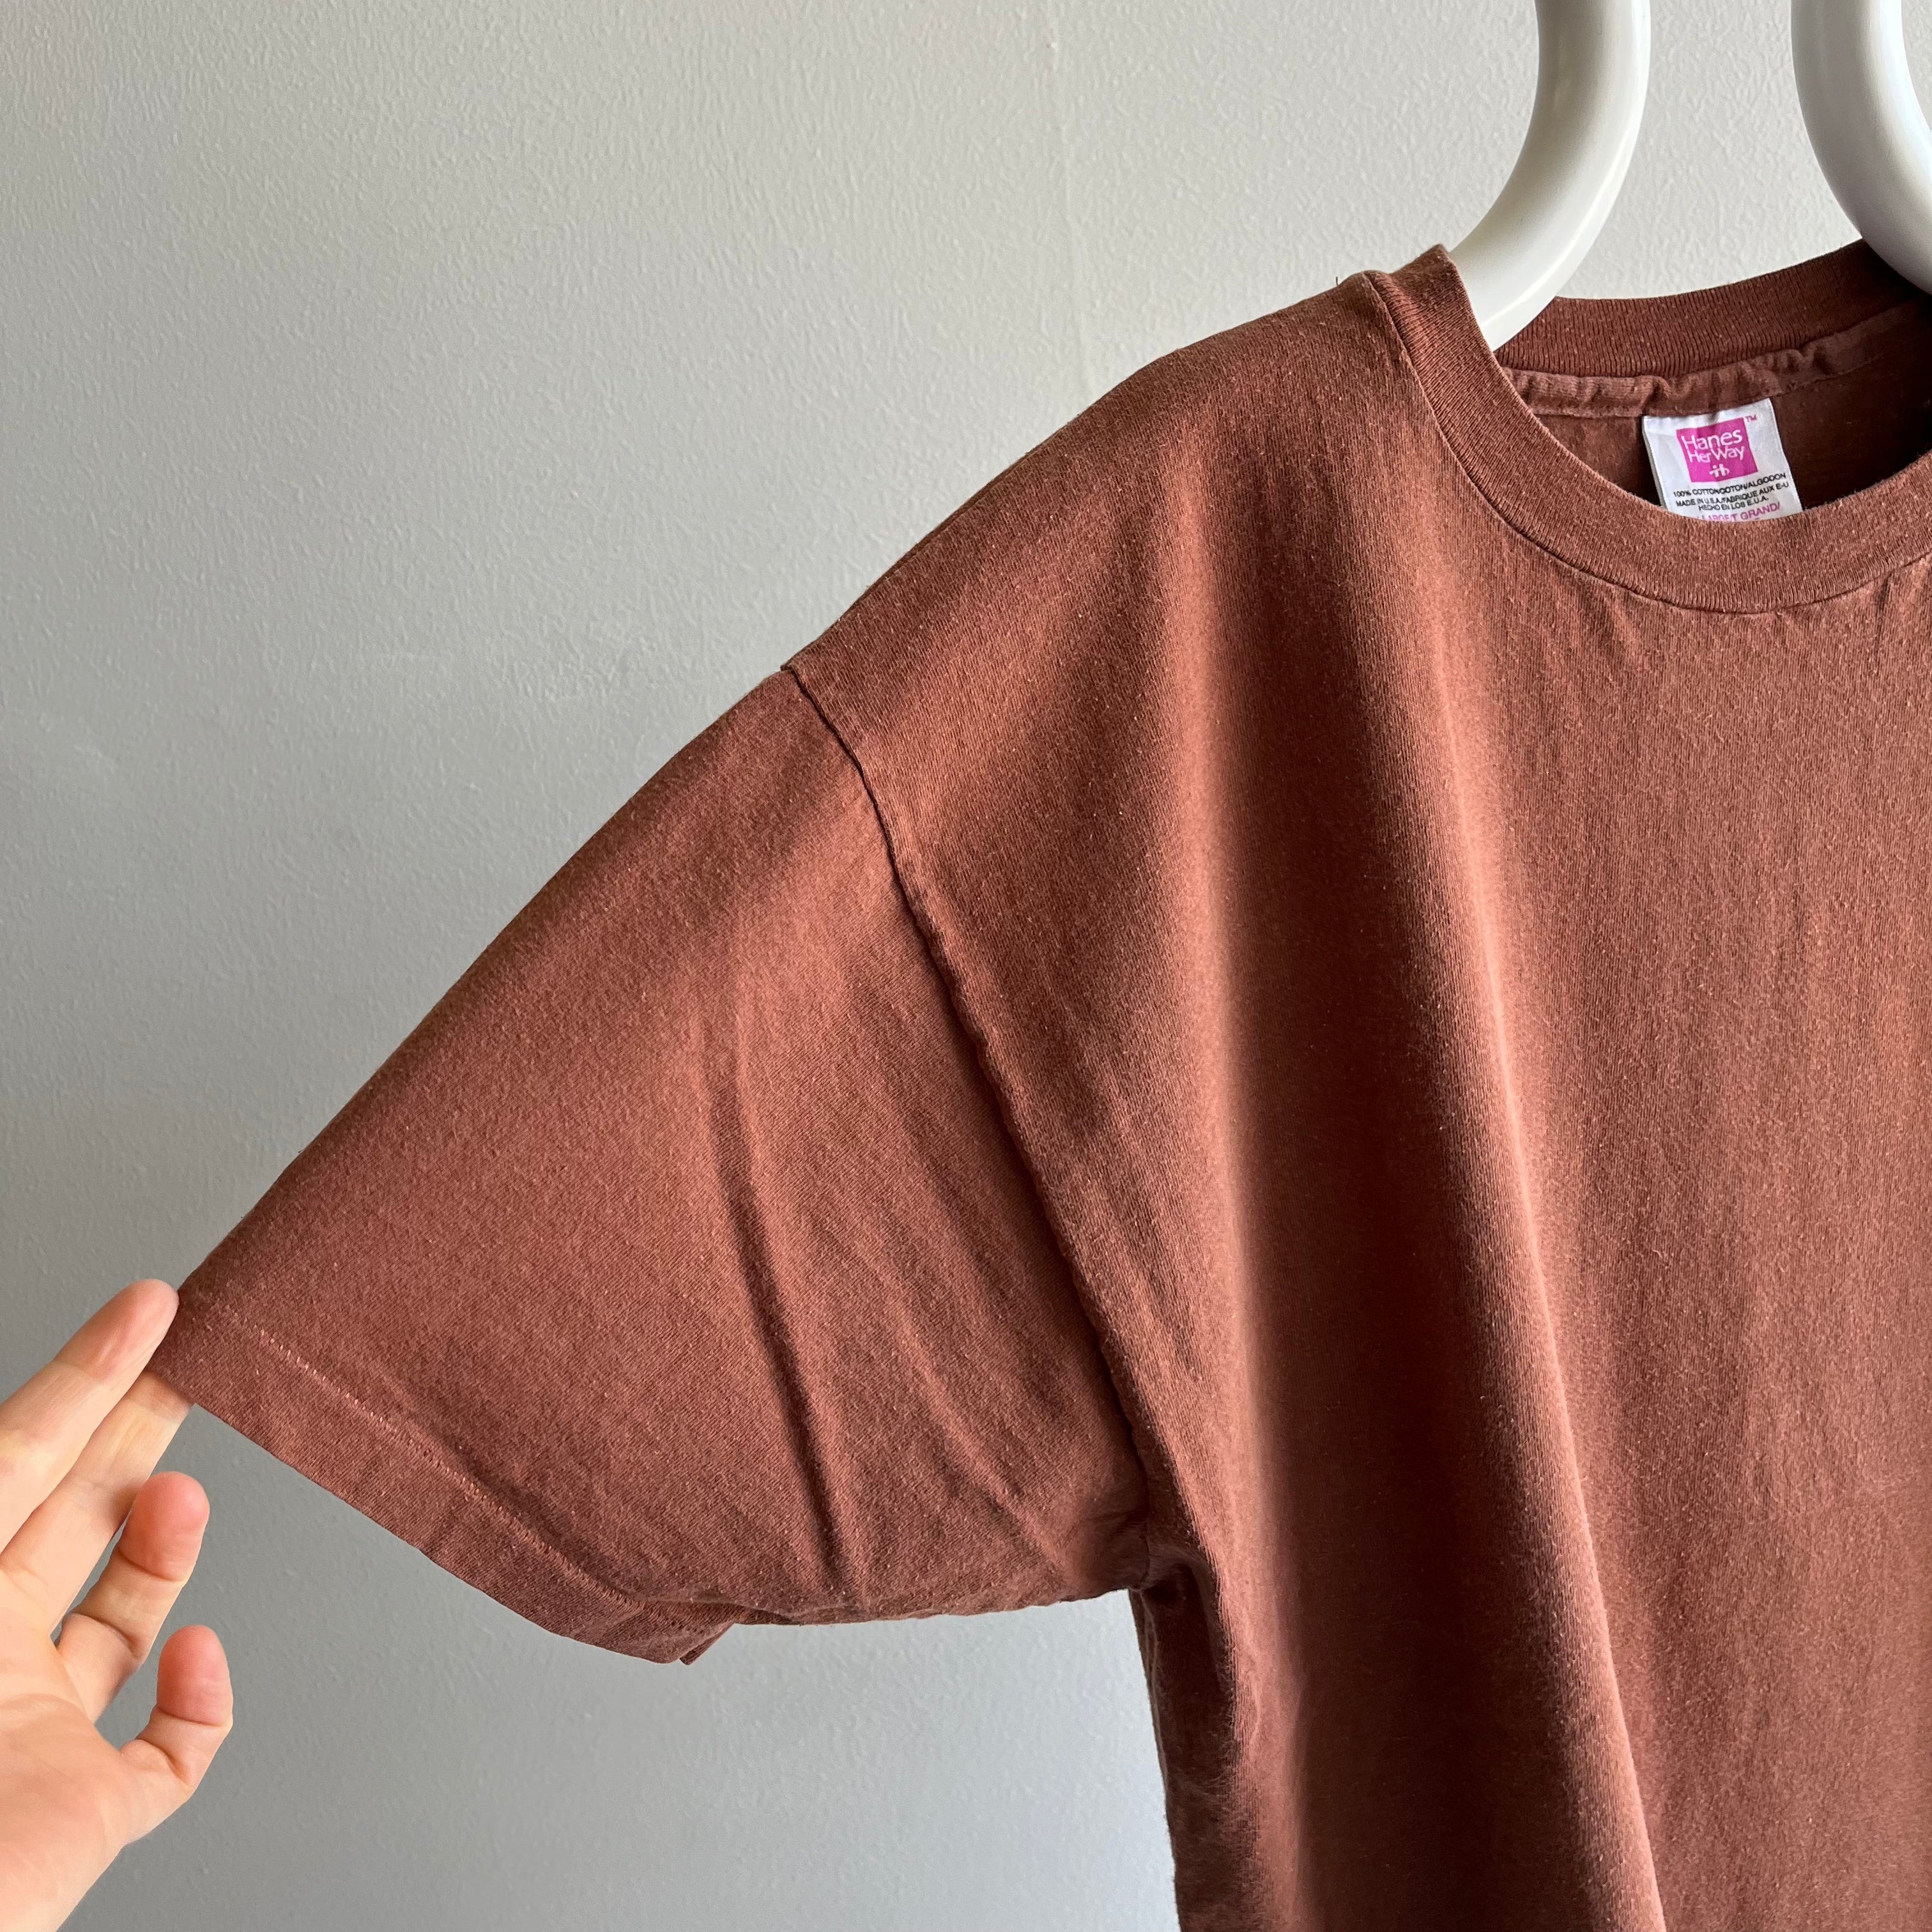 1990s Hanes Her Way Latte Brown Cotton T-Shirt